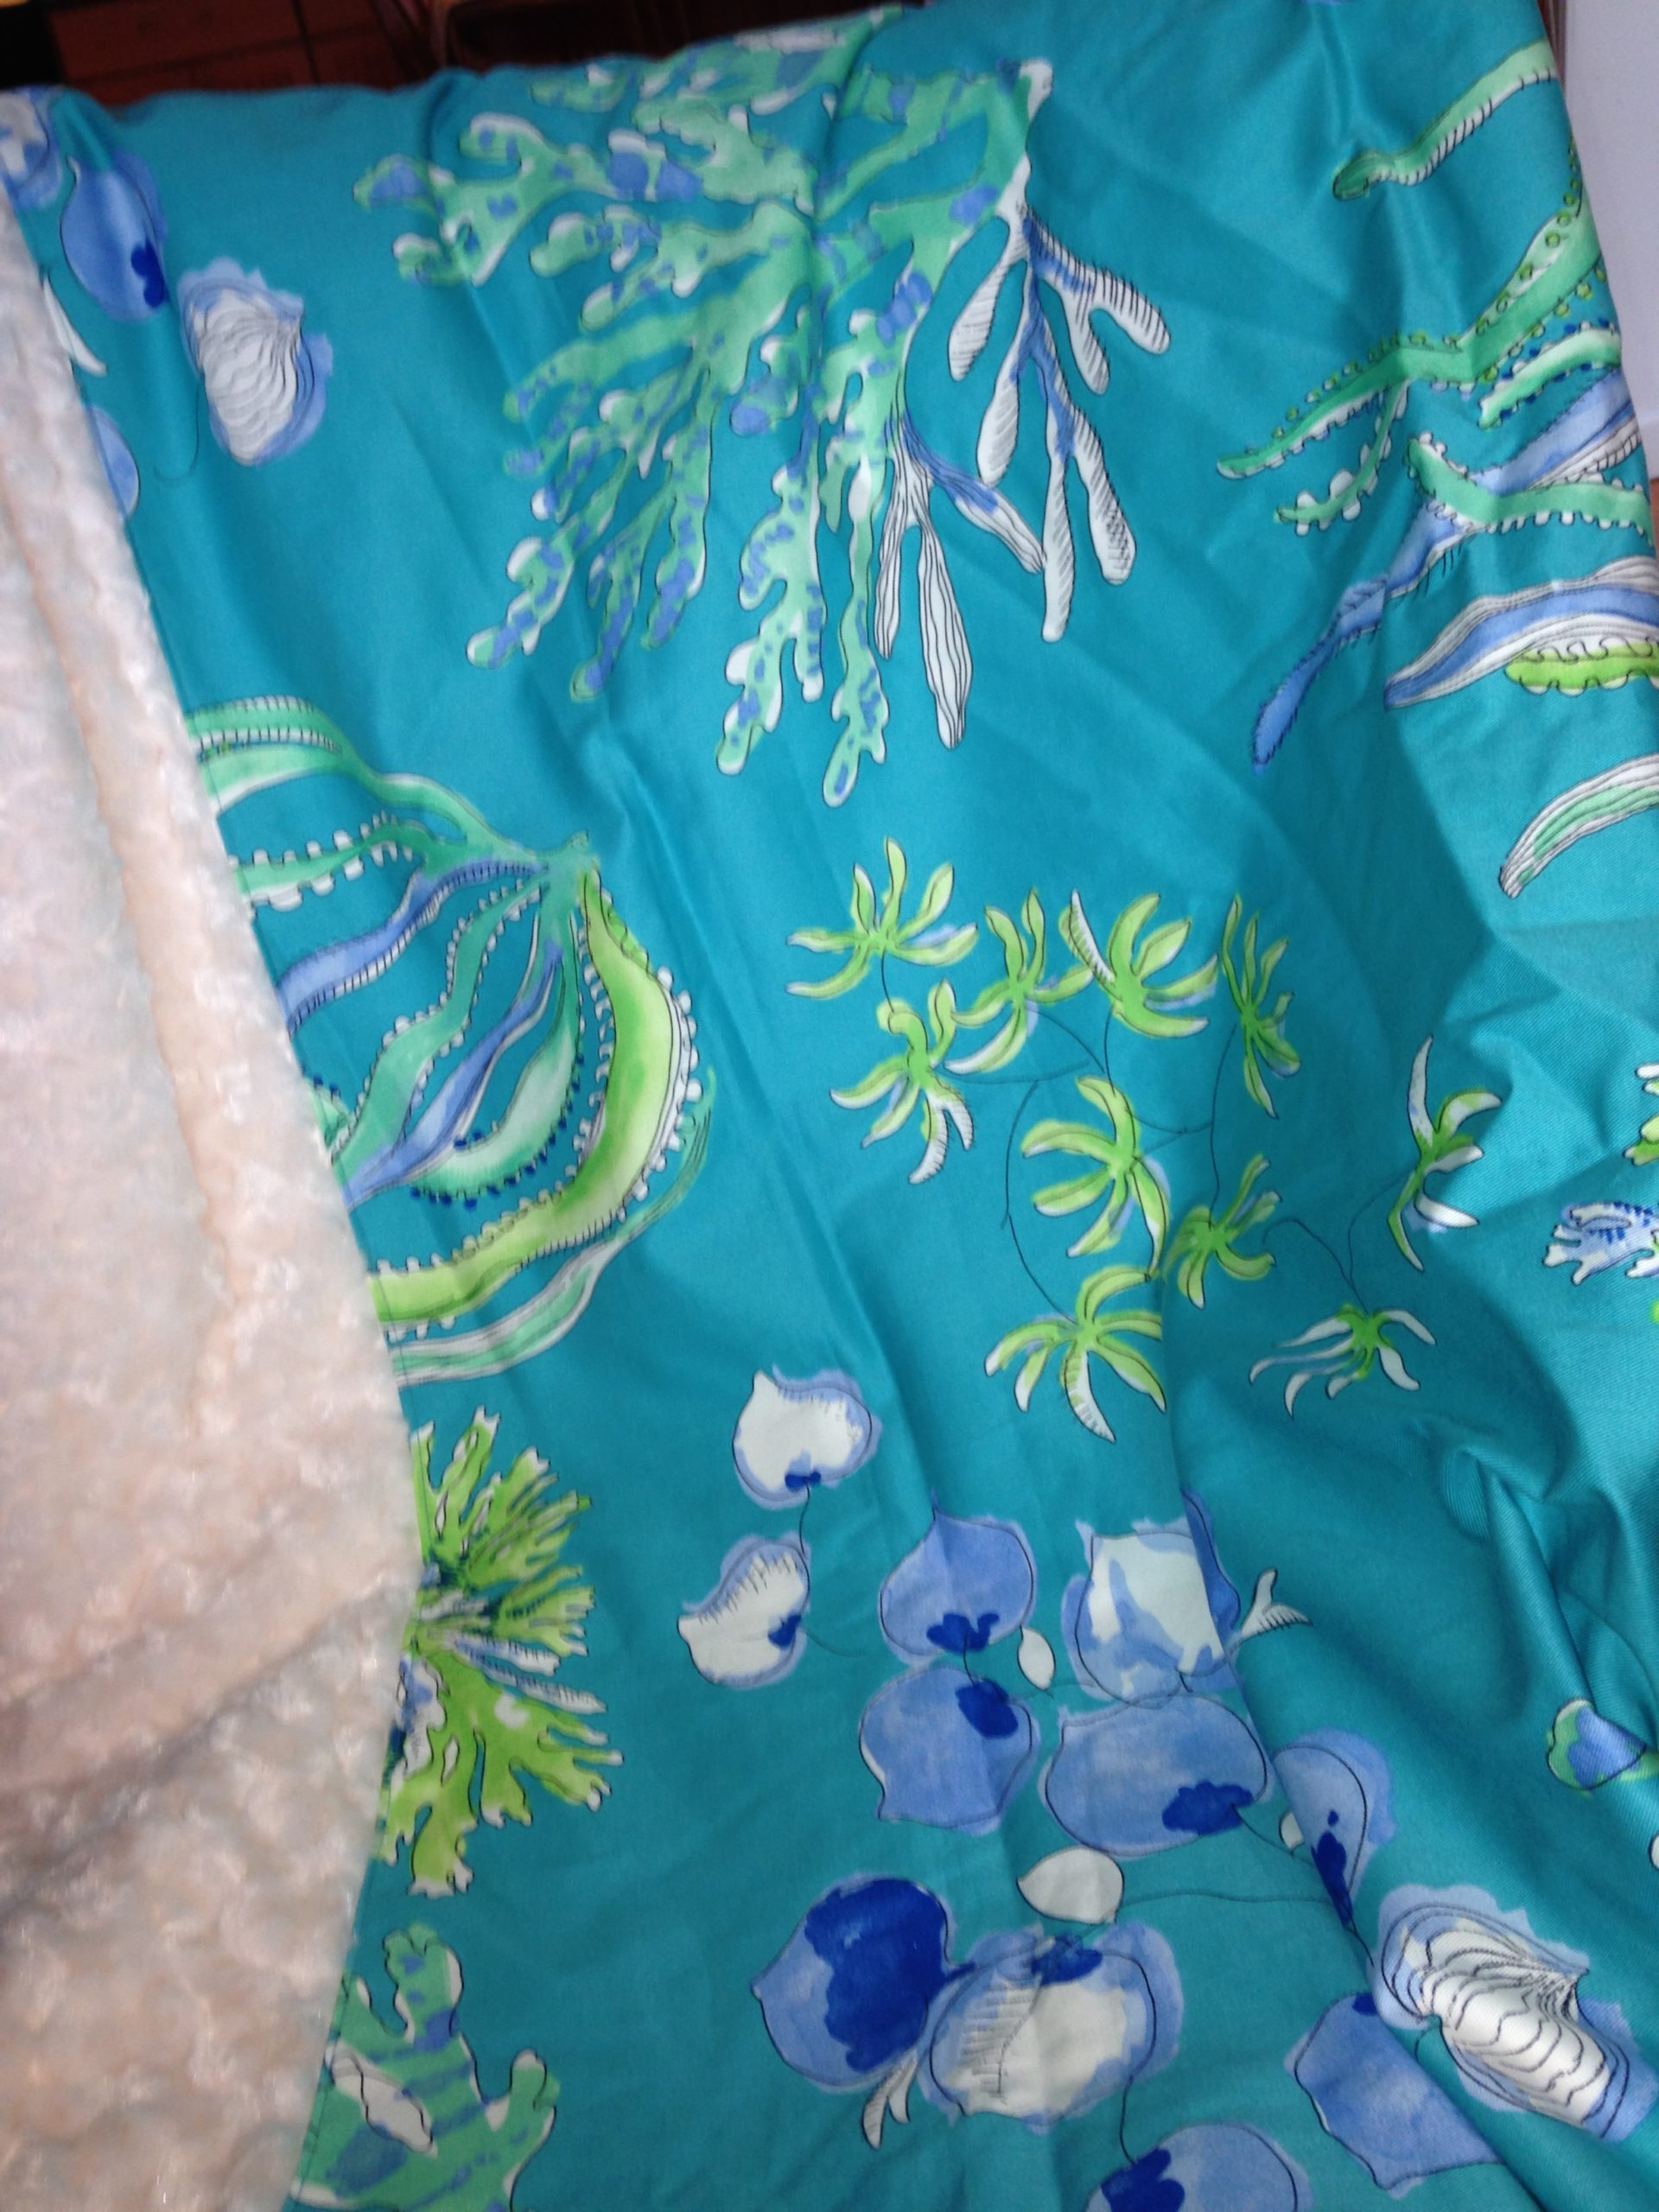 Maui Potpourri | Hawaiian Textile Products for the Home